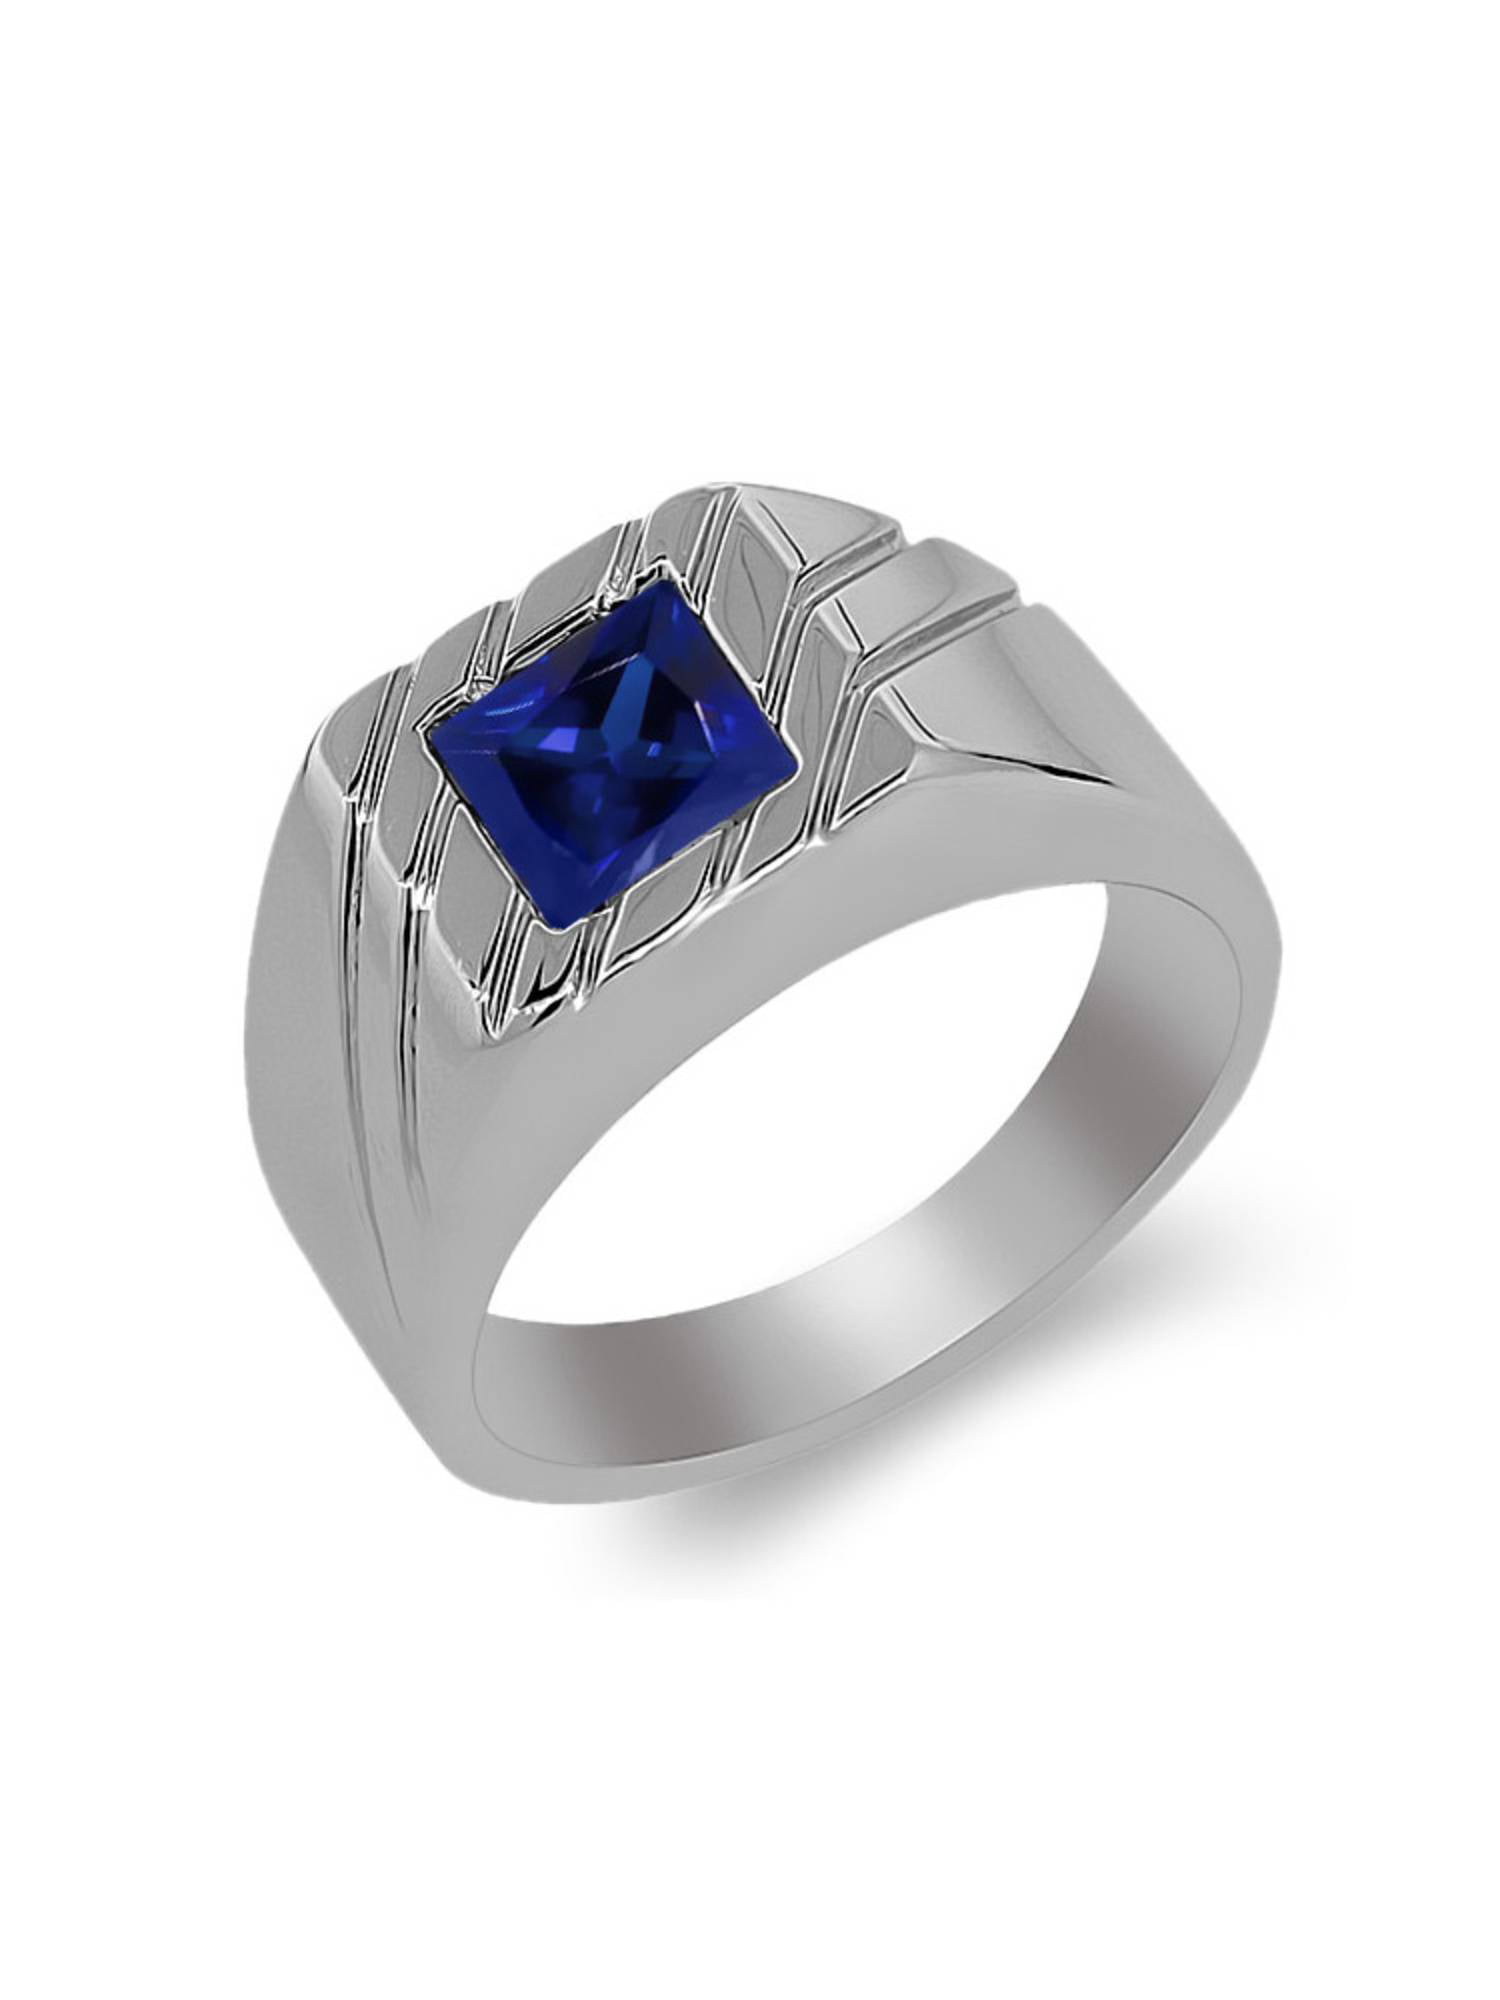 Gem Stone King 2.53 Ct Round Blue Simulated Sapphire White Diamond 925 Silver Mens Ring